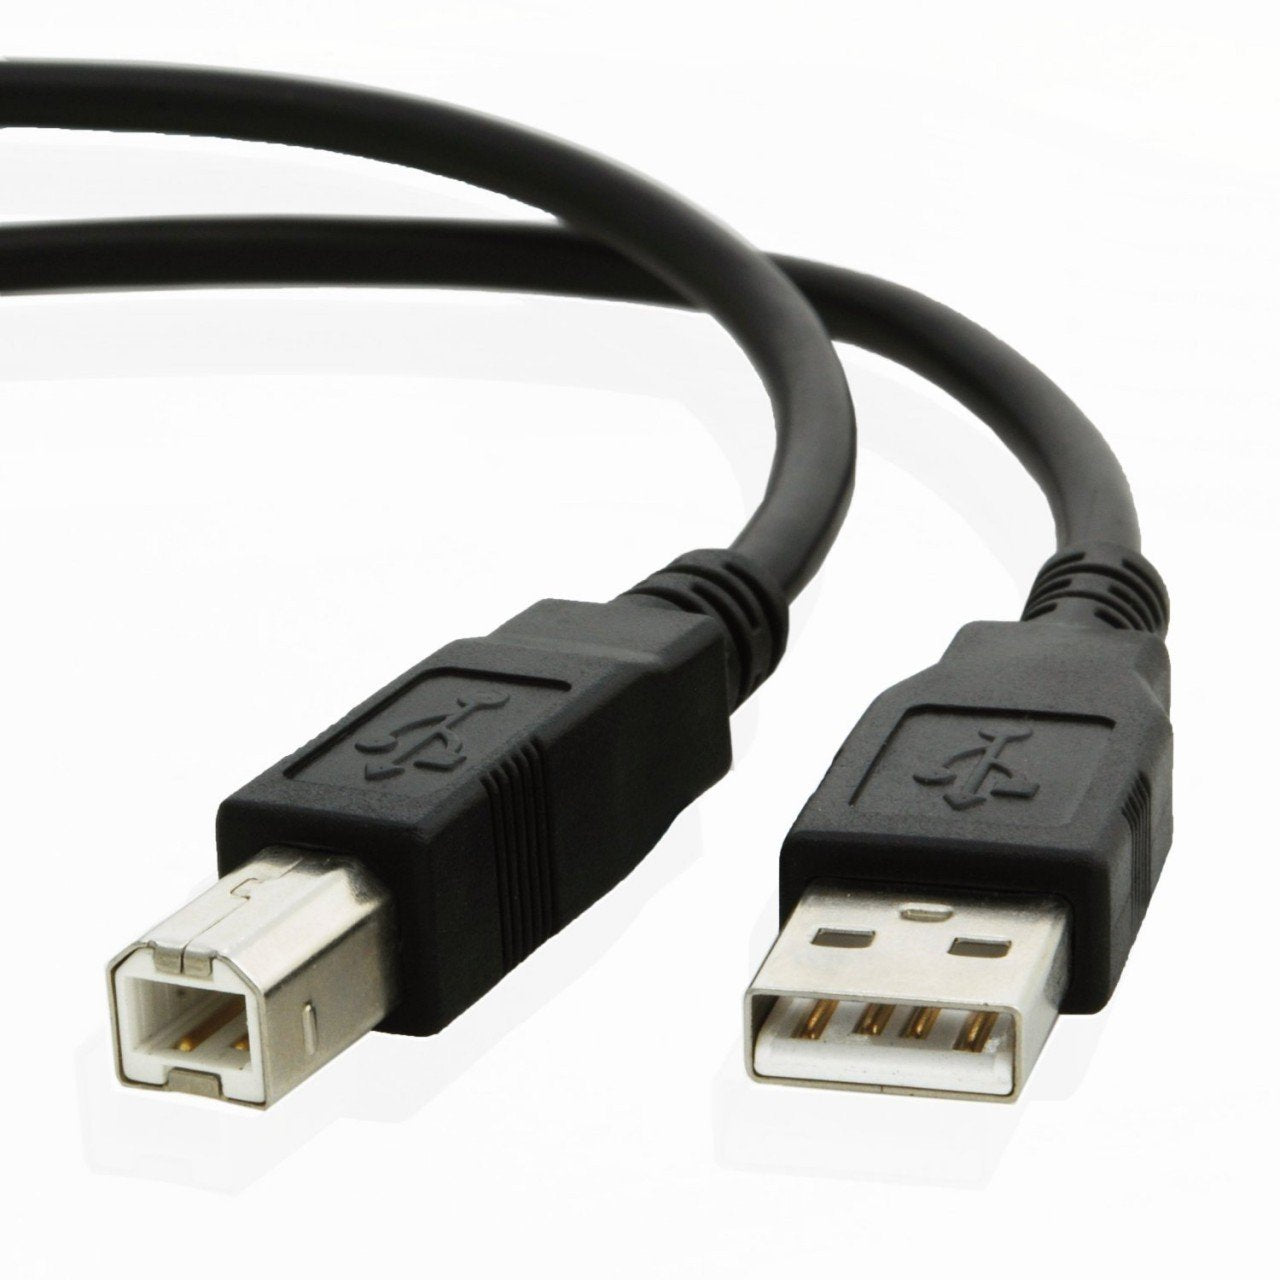 USB cable for Kurzweil ARTIS Artis